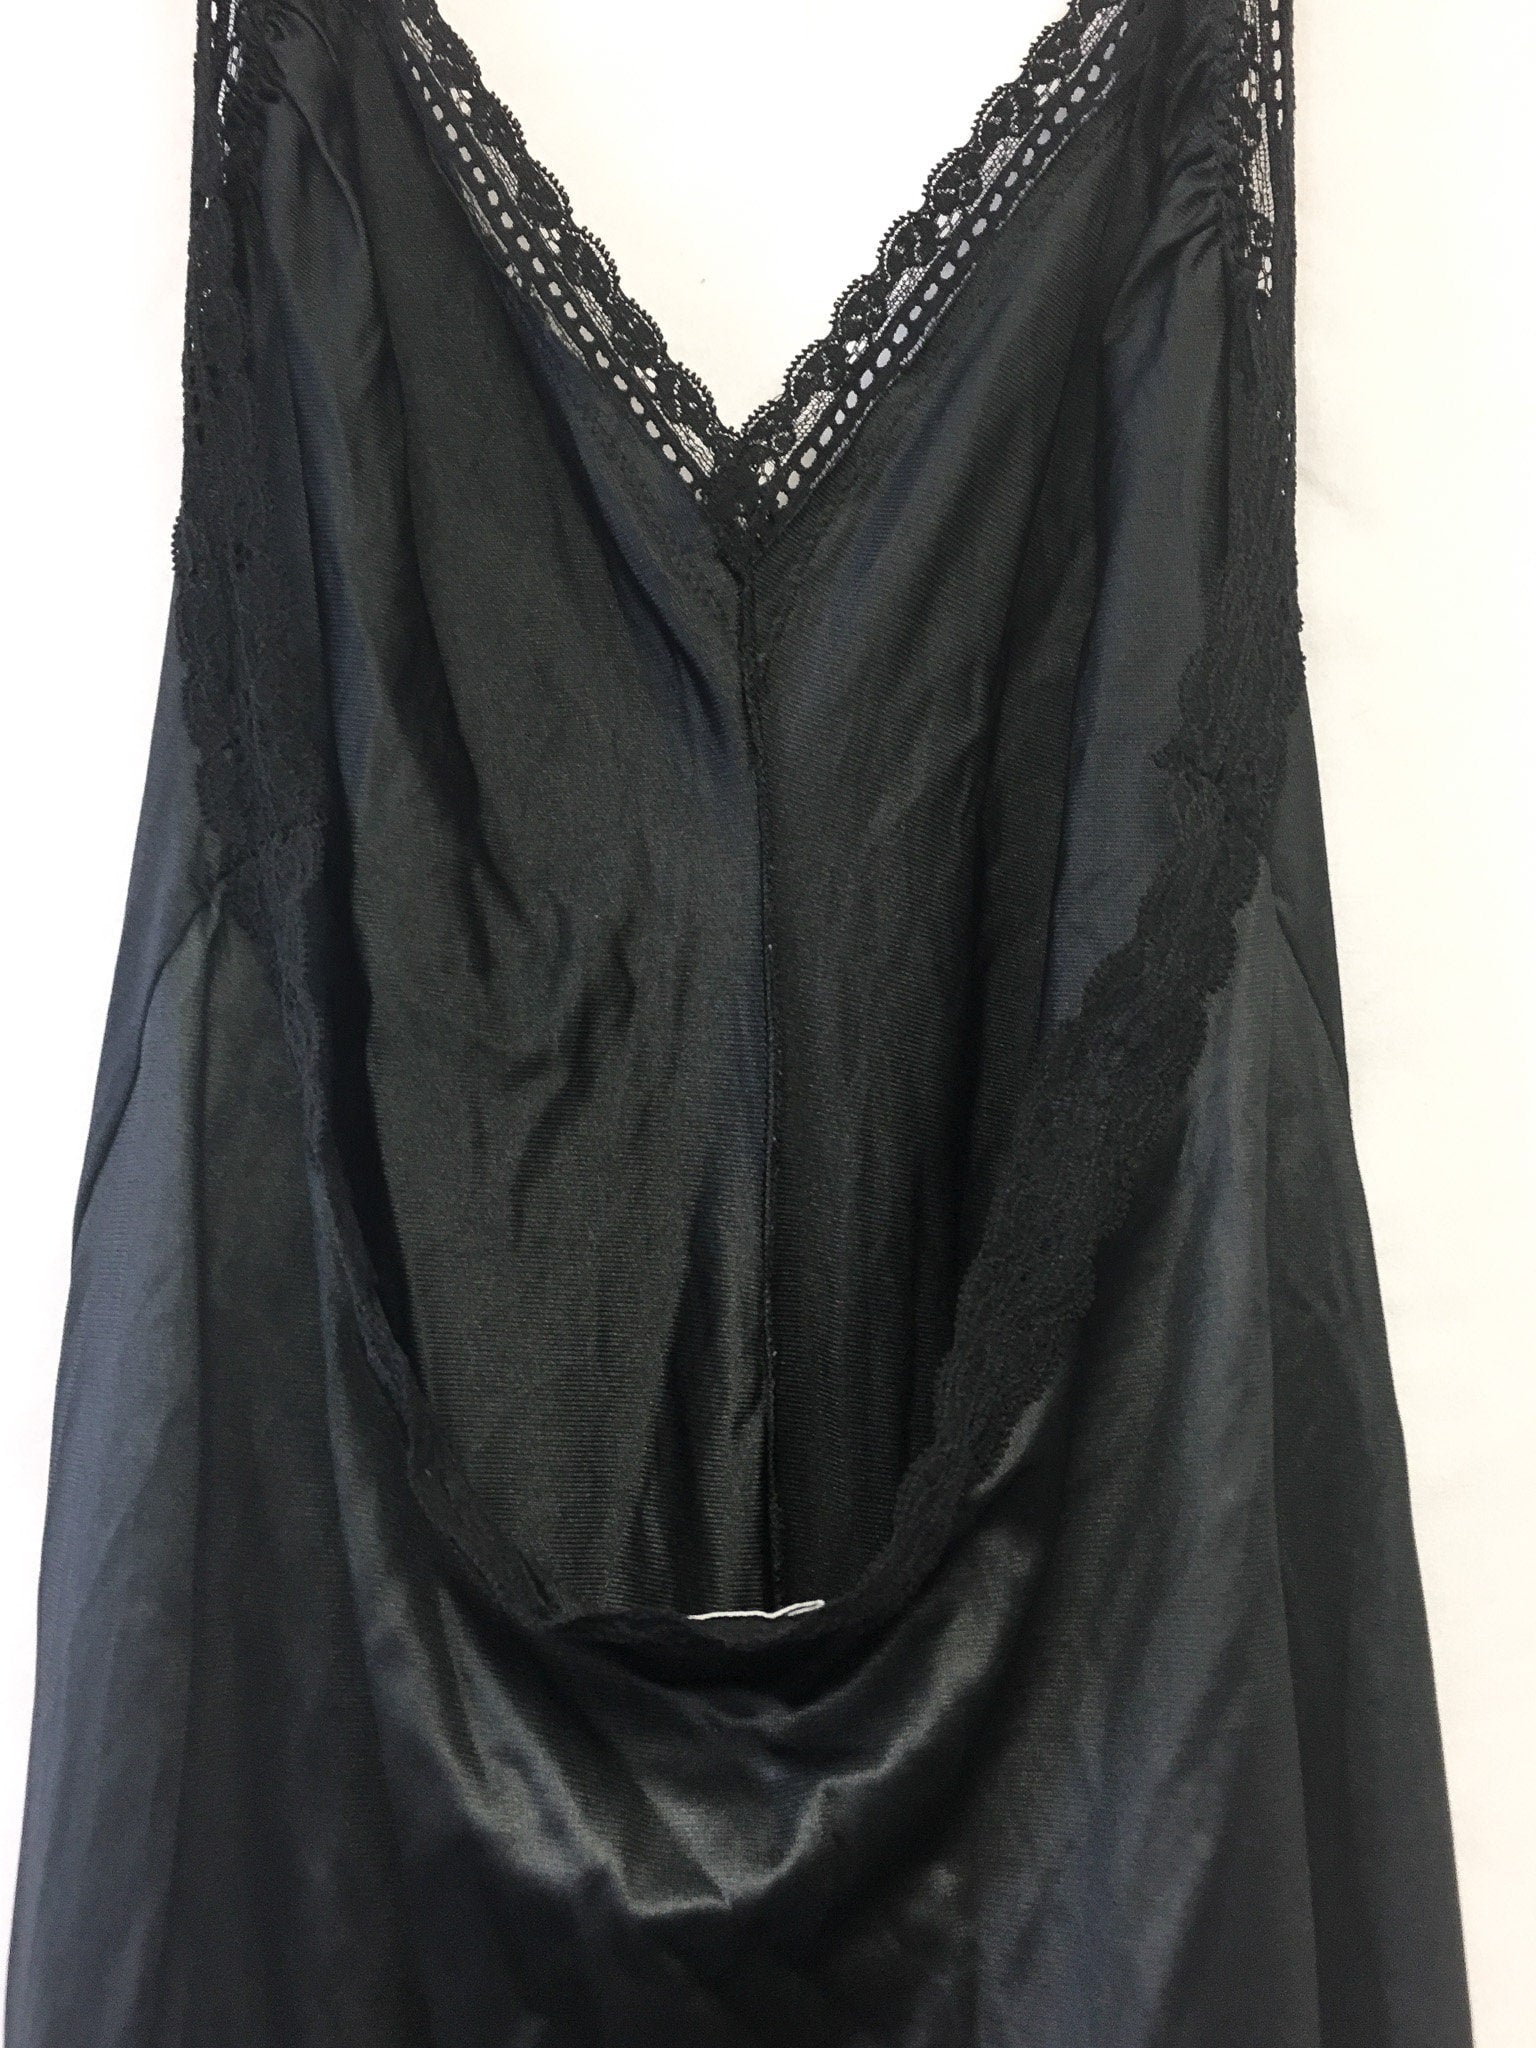 Vintage Gossard Artemis Black Halter Slip Dress with Lace Detail, Sz. M, Vintage Peignoir Slip Dress